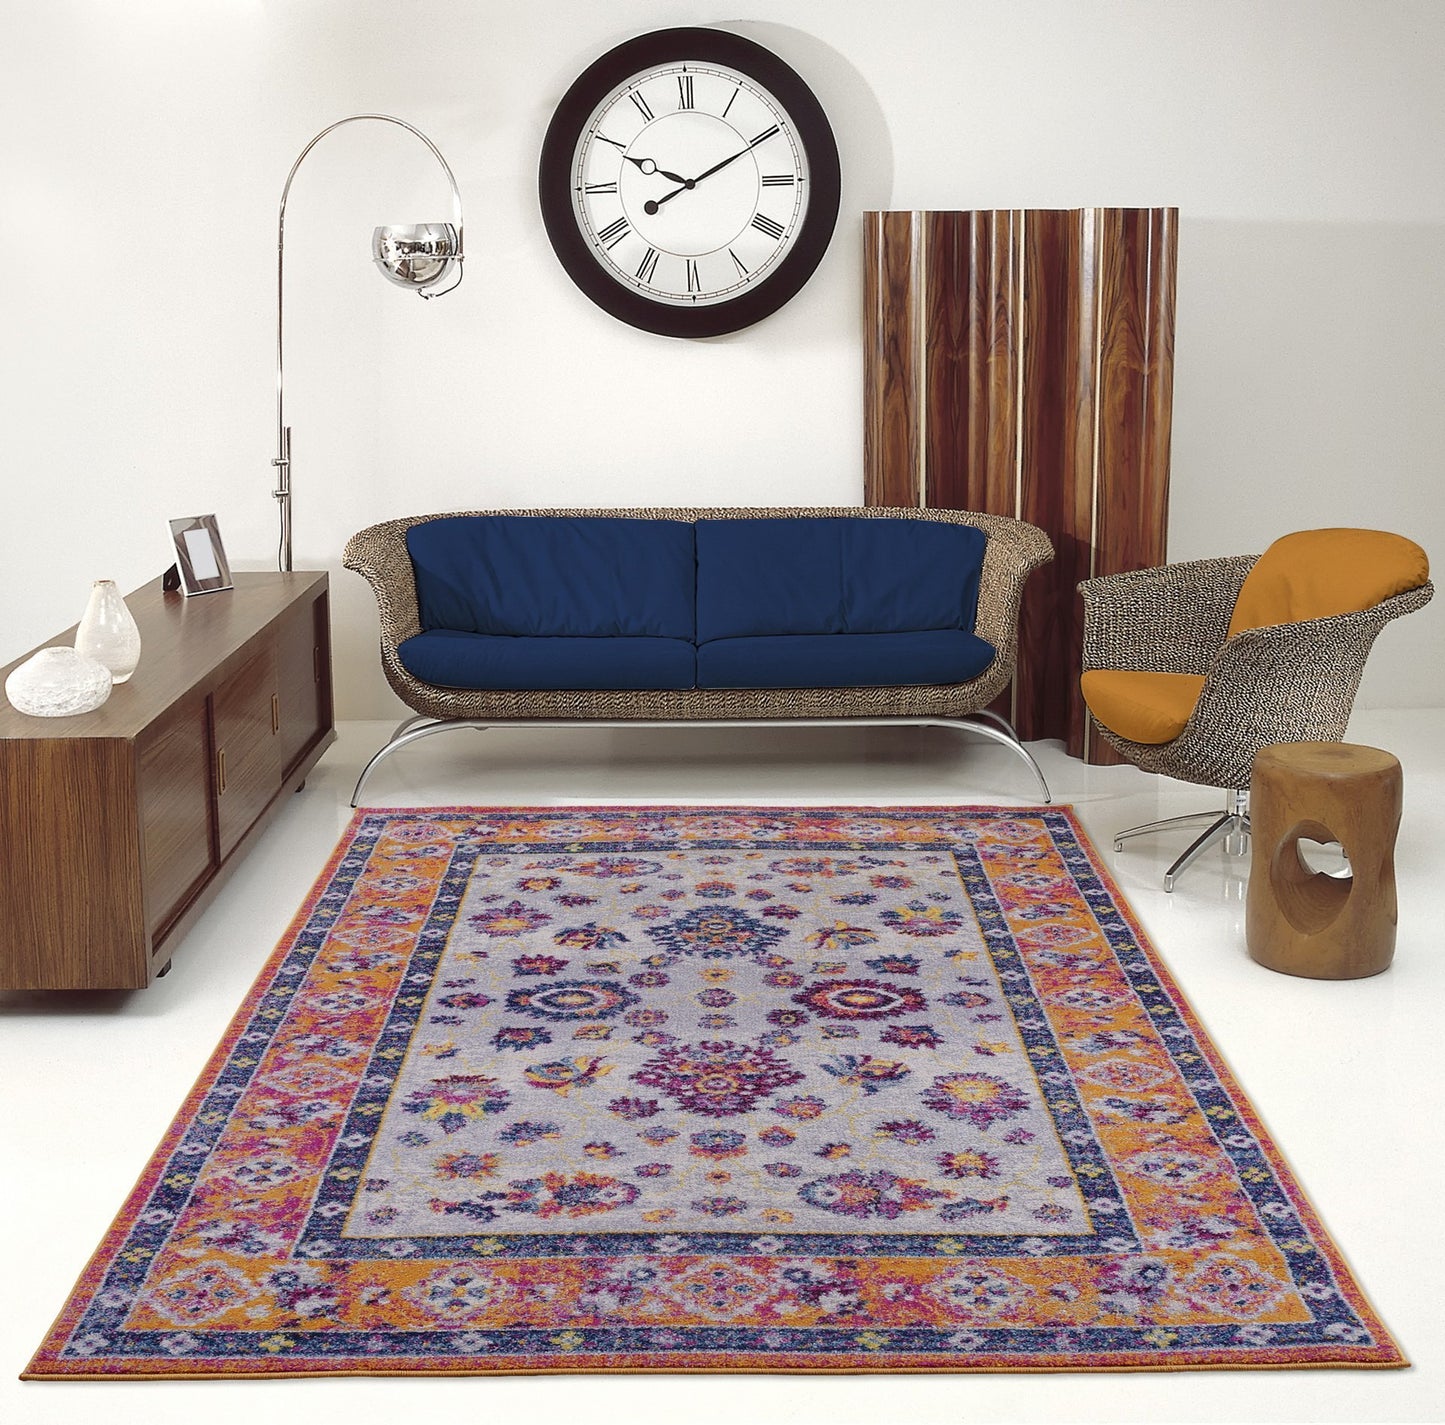 Topaz Traditional Design Innovative Comfortable European Mat Carpet in Orange Pink